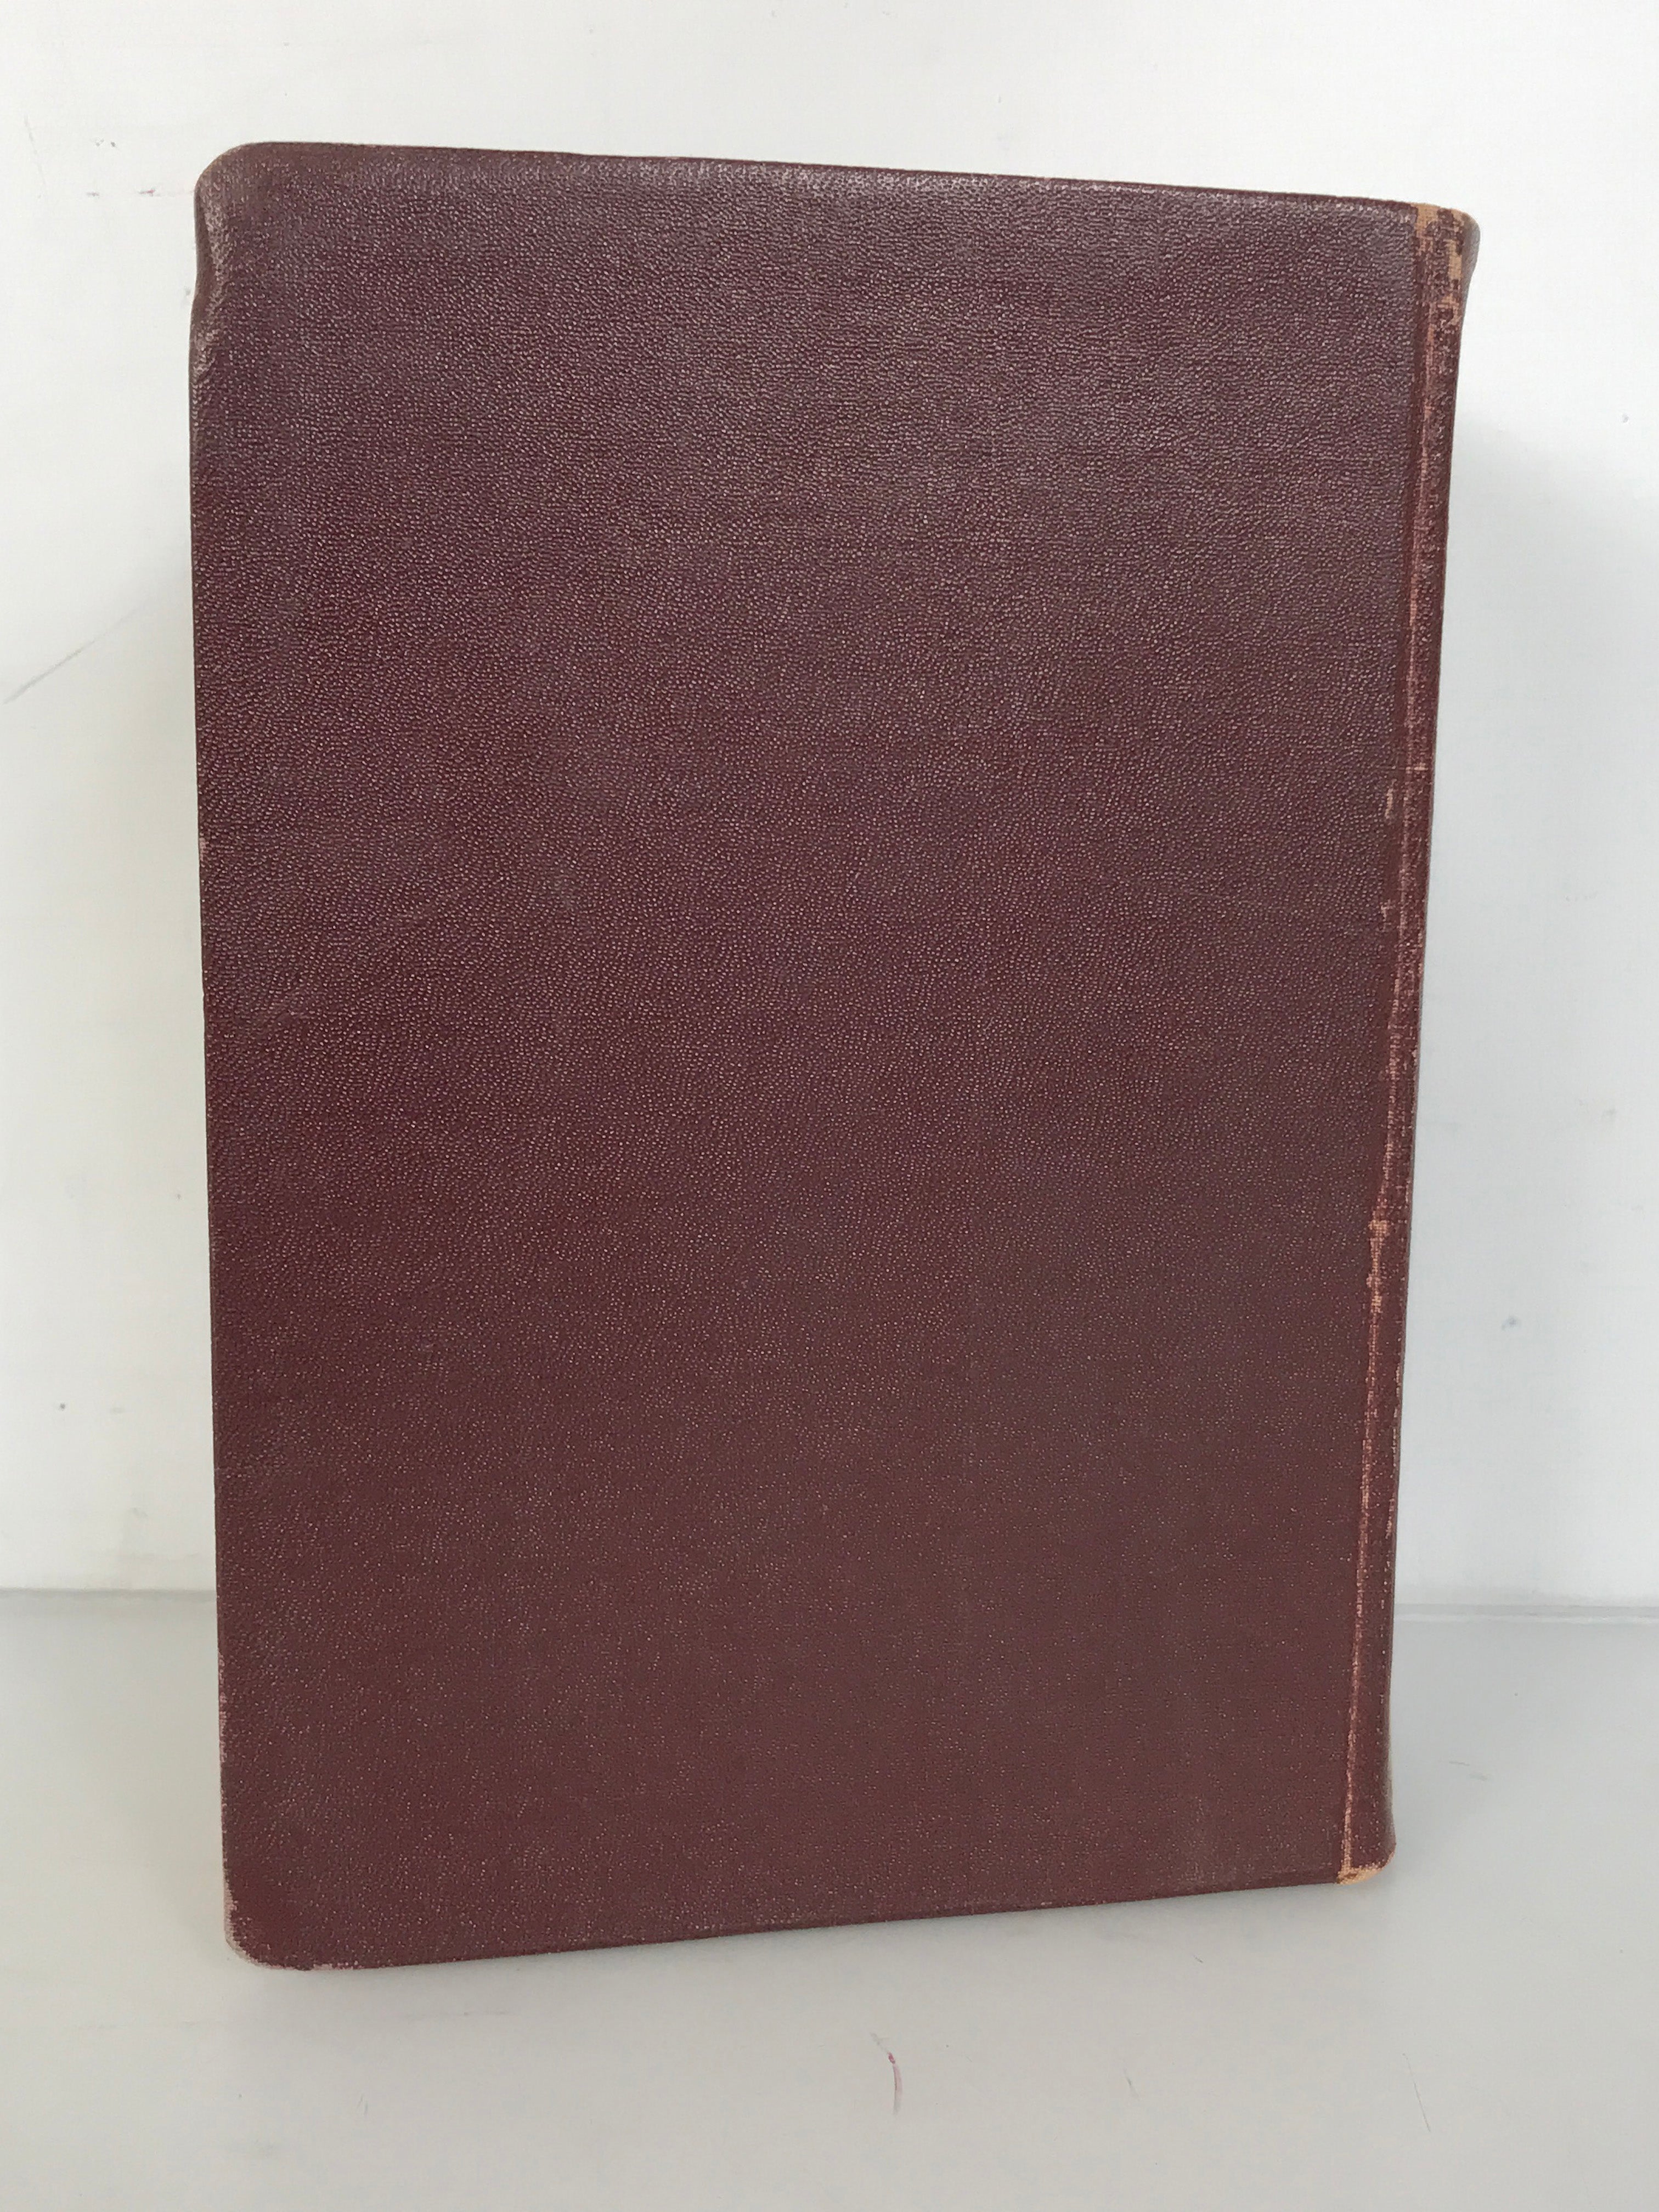 Handbook of Chemistry by Norbert Lange Eighth Edition 1952 HC